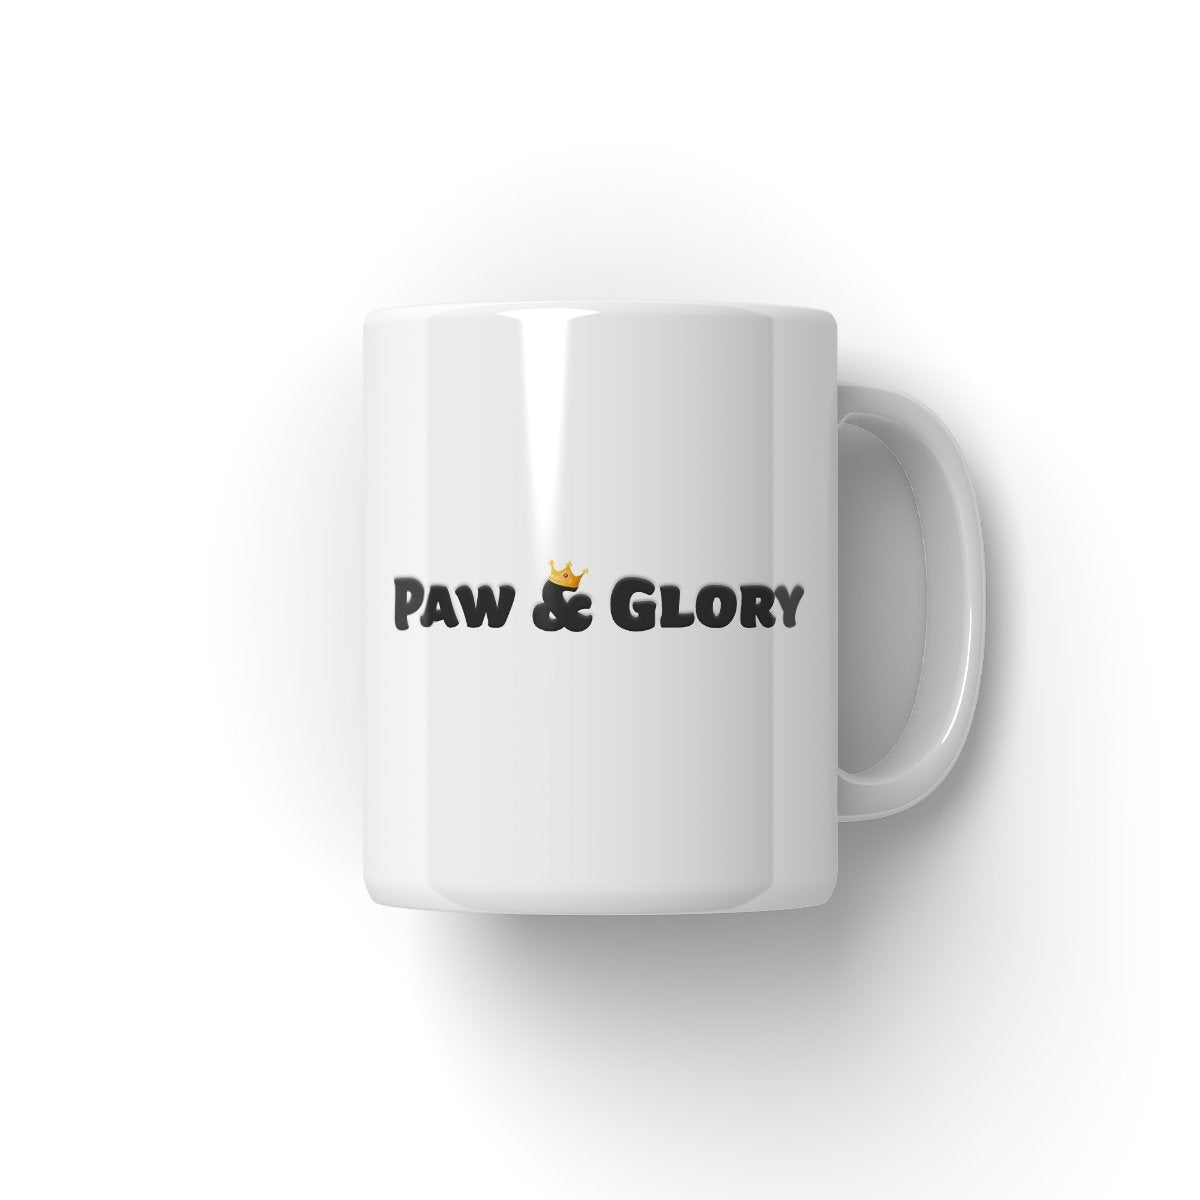 Only Paws and Horses: Custom 3 Pet Mug - Paw & Glory - #pet portraits# - #dog portraits# - #pet portraits uk#paw & glory, custom pet portrait Mug,personalized coffee mugs with pets, mug create, dog and owner mugs, personalizable mugs, photo with mug